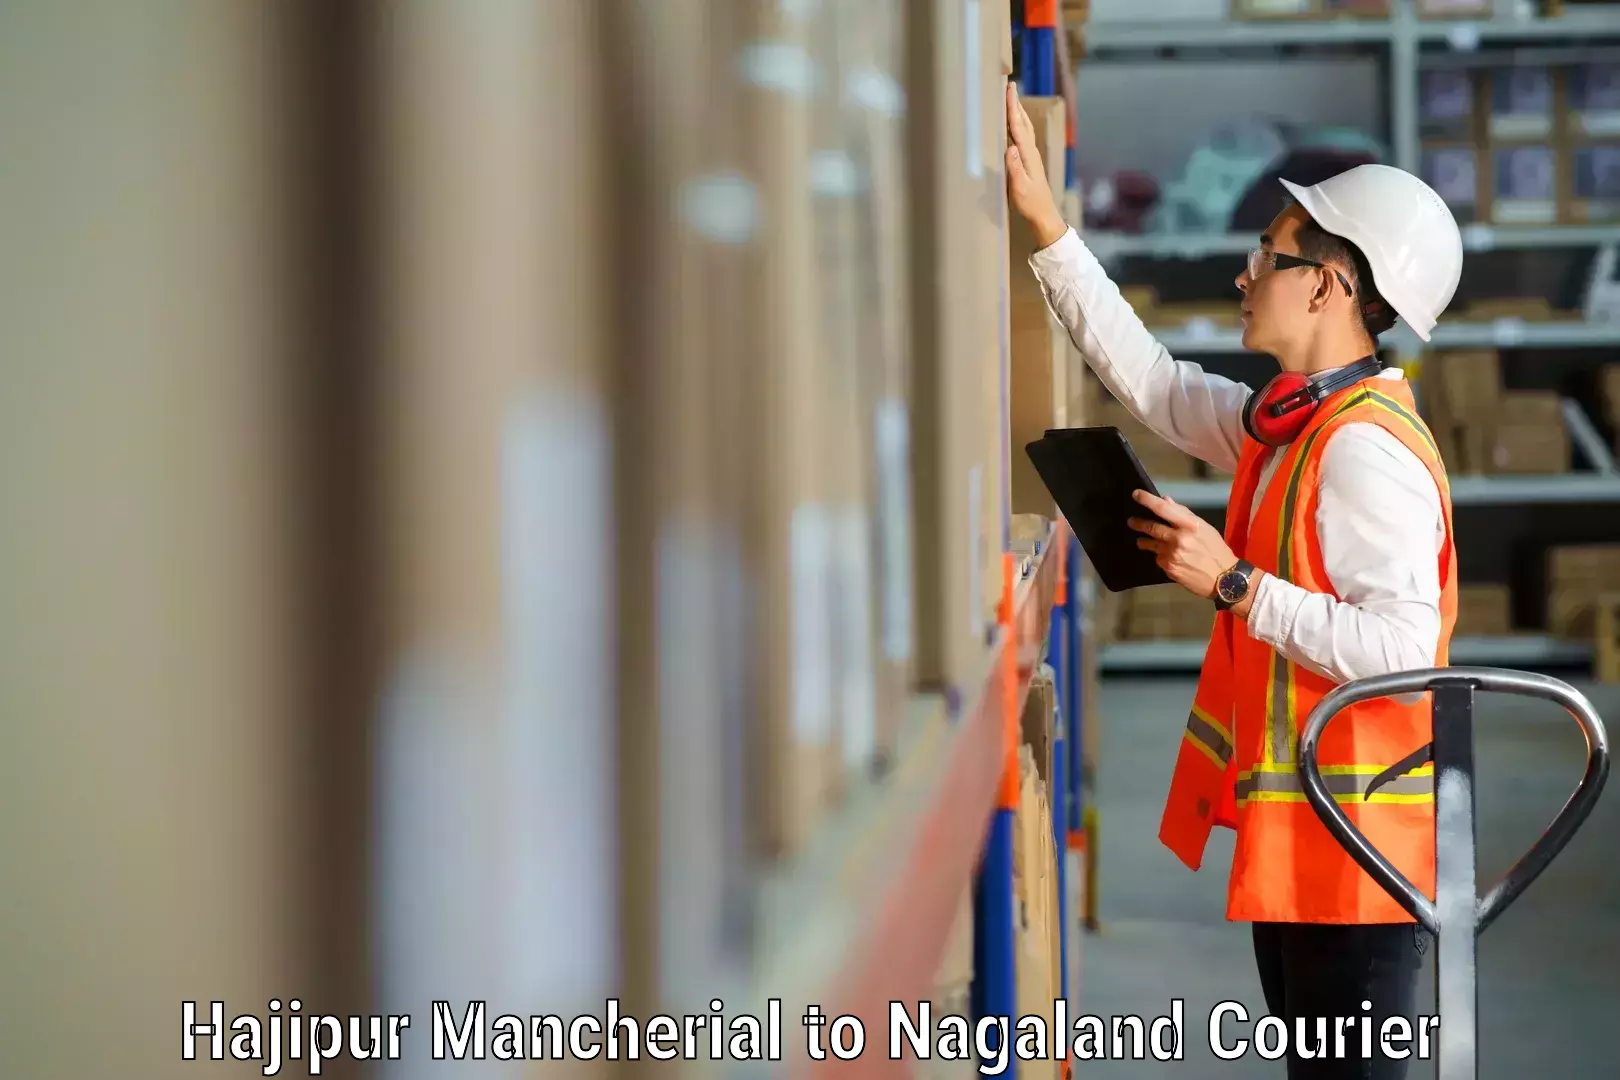 Furniture transport experts Hajipur Mancherial to NIT Nagaland